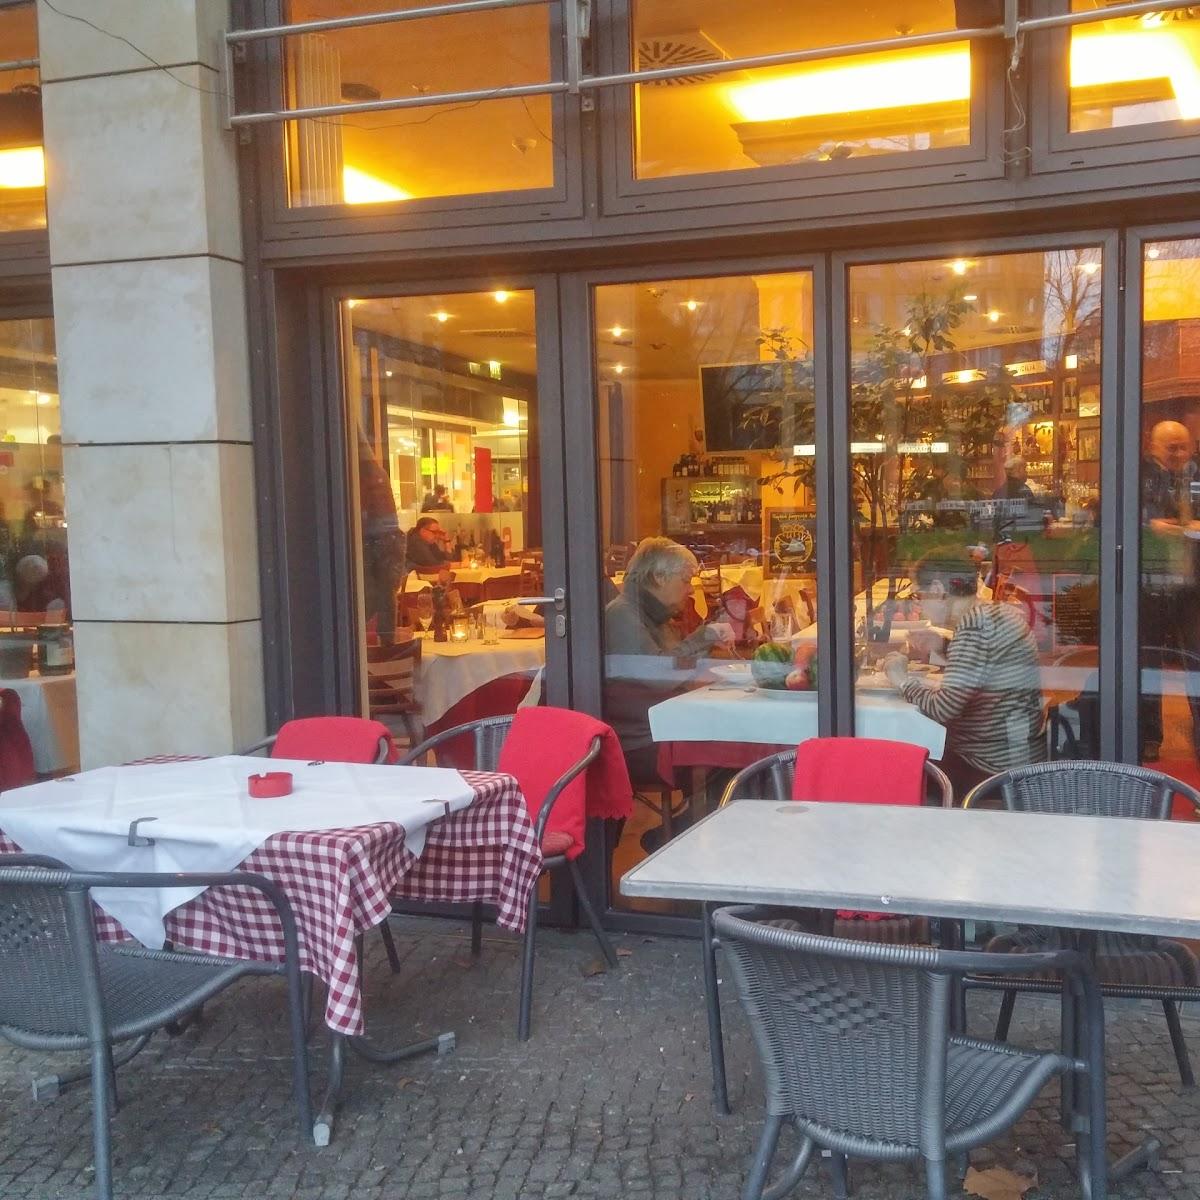 Restaurant "Ristorante San Marino" in Berlin